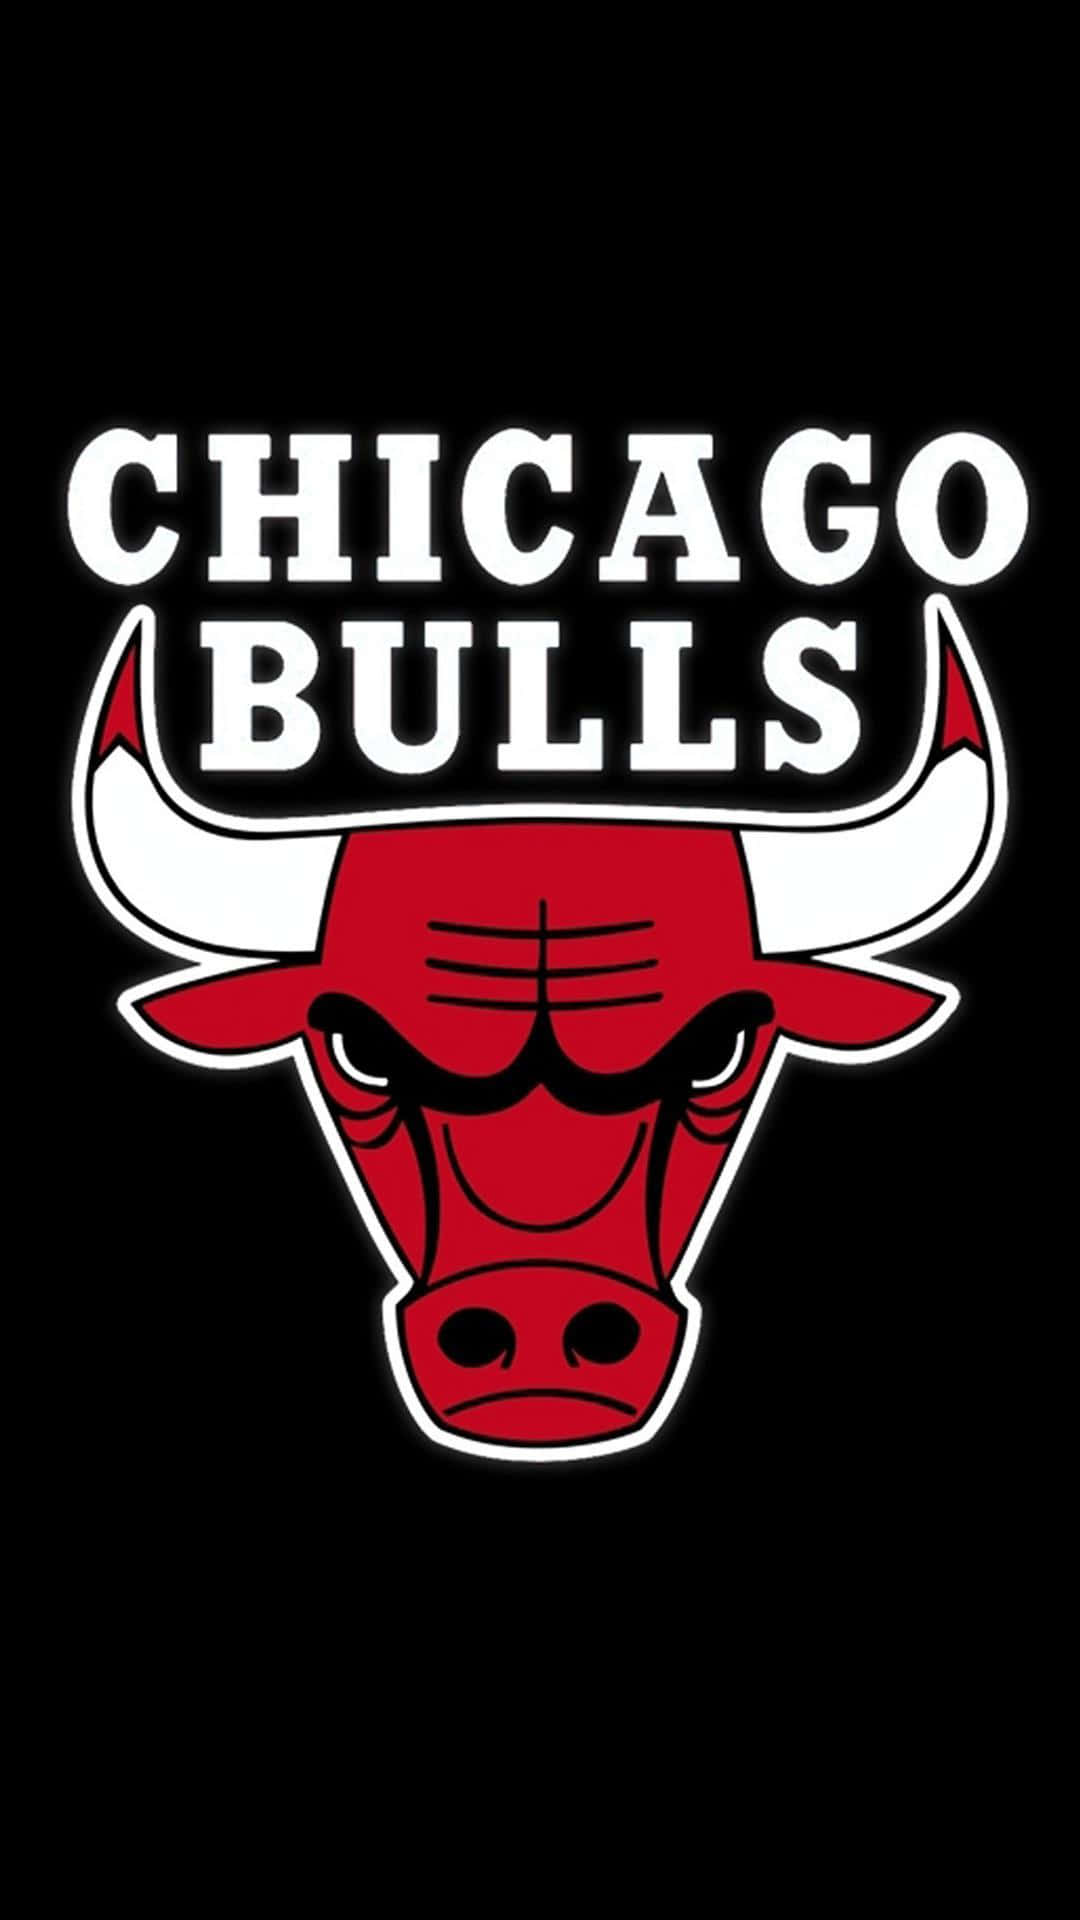 Fondode Pantalla Del Logotipo De Los Chicago Bulls En Teléfono. Fondo de pantalla